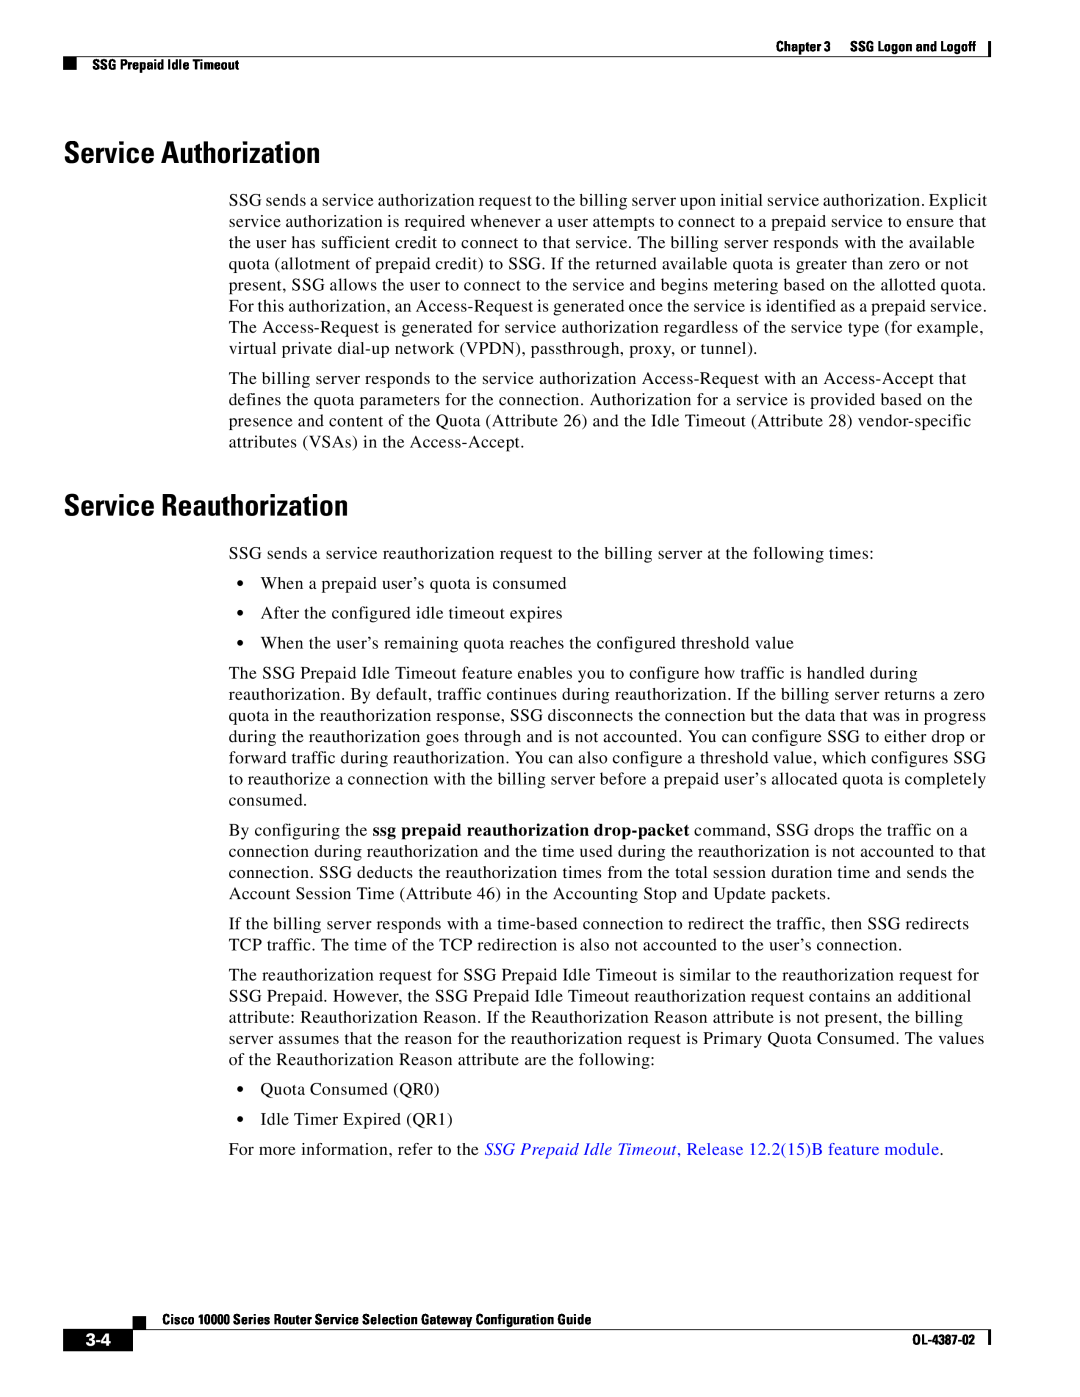 Cisco Systems OL-4387-02 manual Service Authorization, Service Reauthorization 